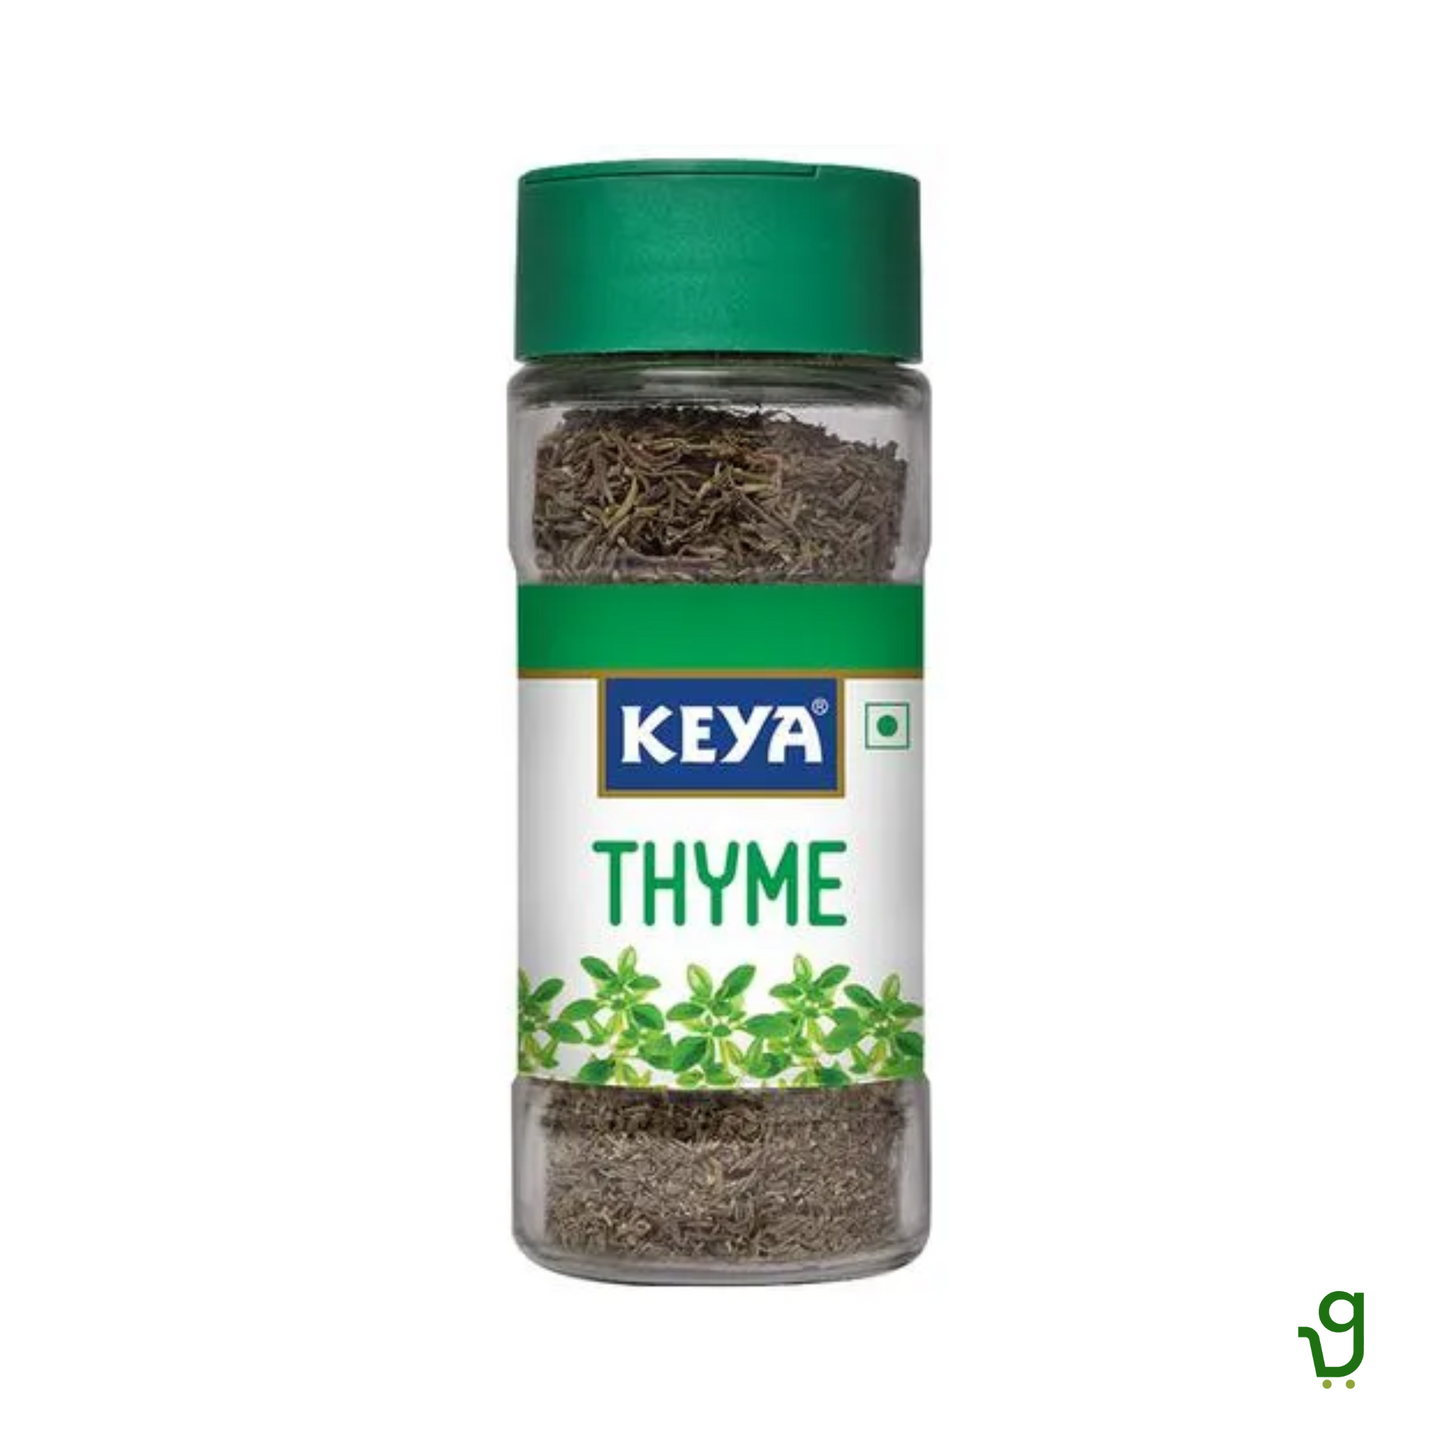 Keya Thyme 27g